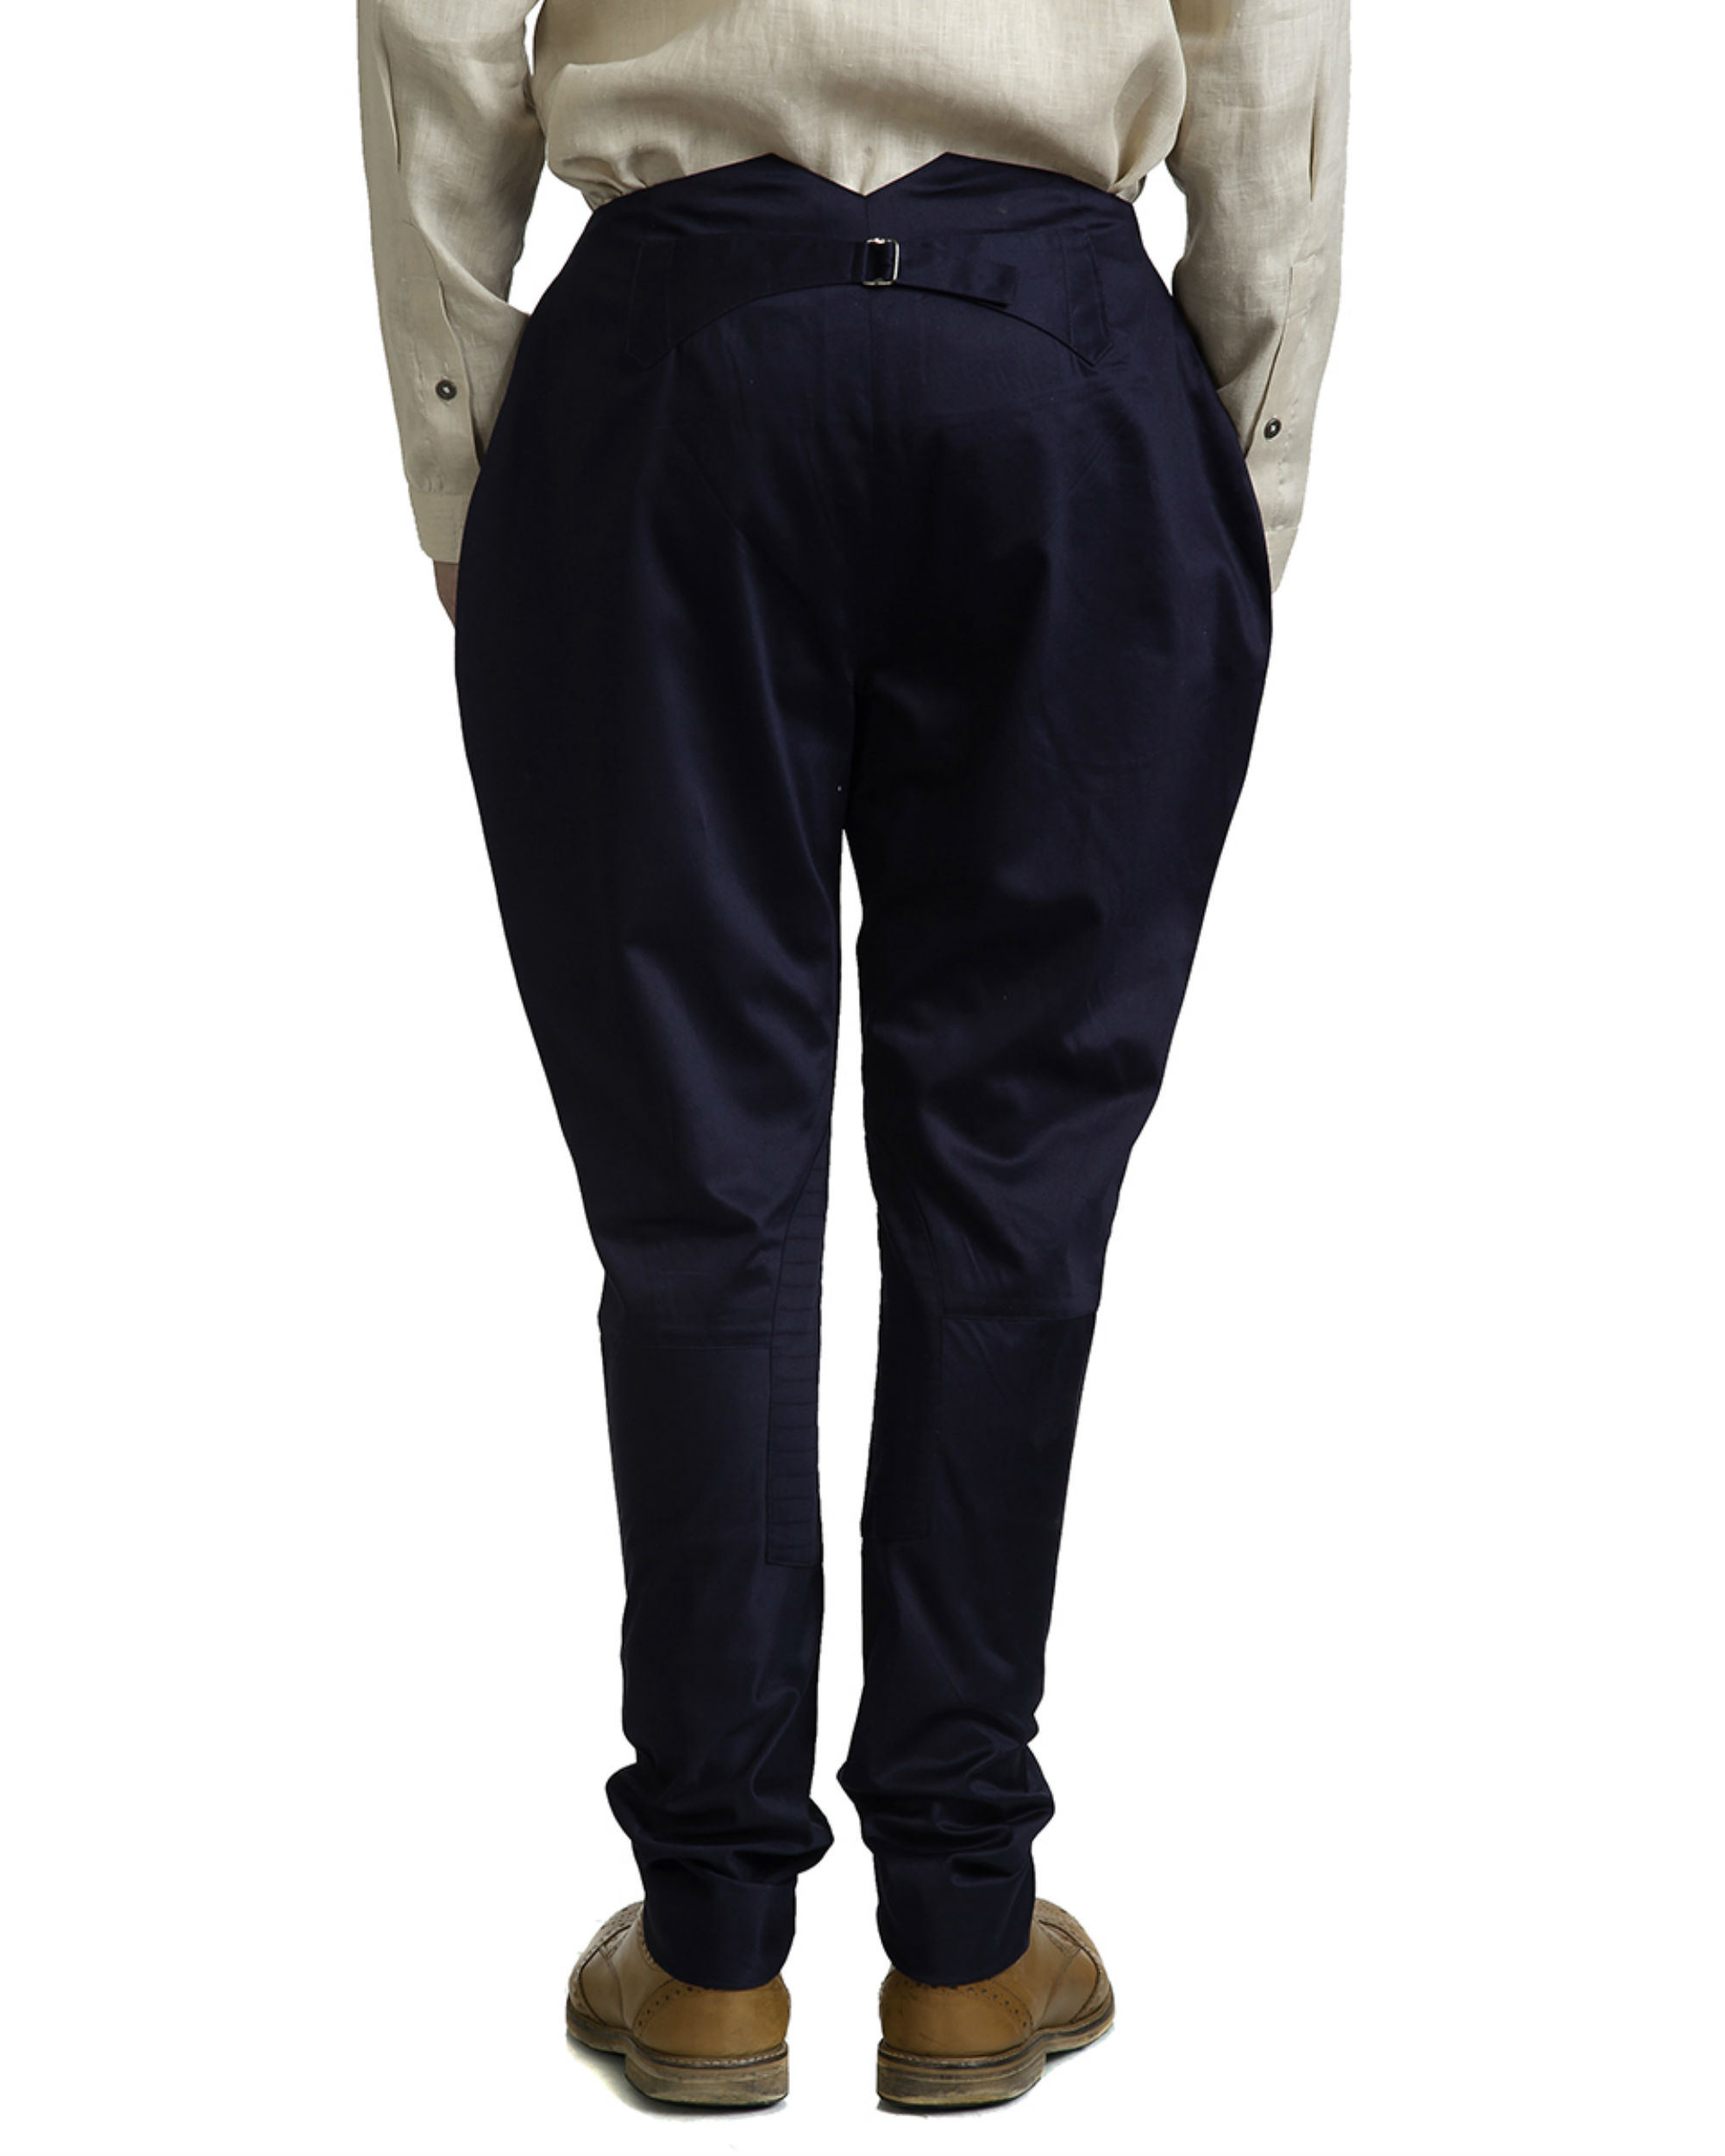 Lace Up Calves Cotton Jodhpurs Pants | African clothing for men, Jodhpur  pants, Tuxedo for men